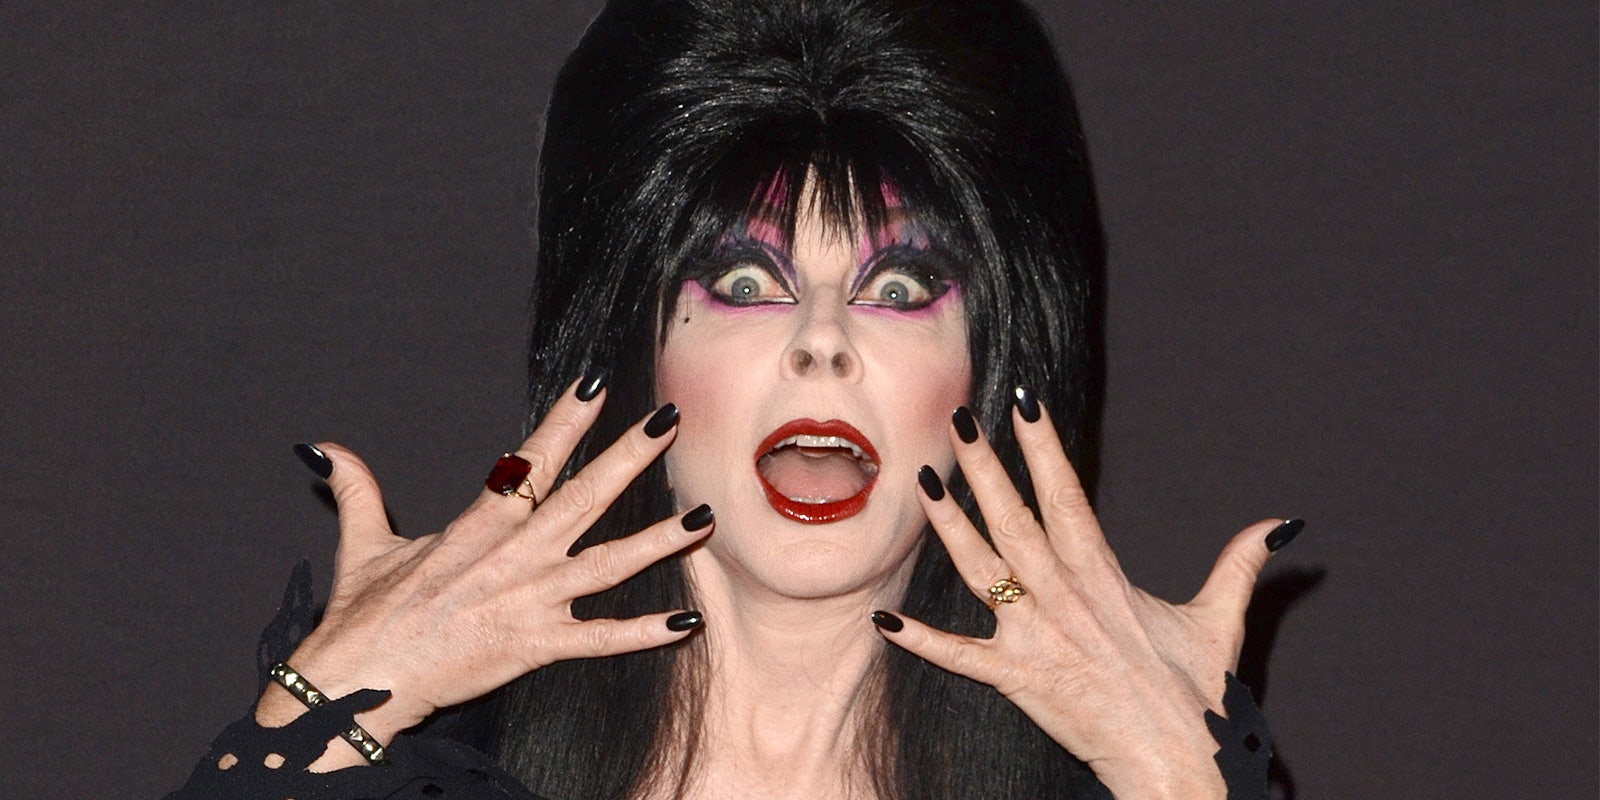 Elvira, aka Cassandra Peterson